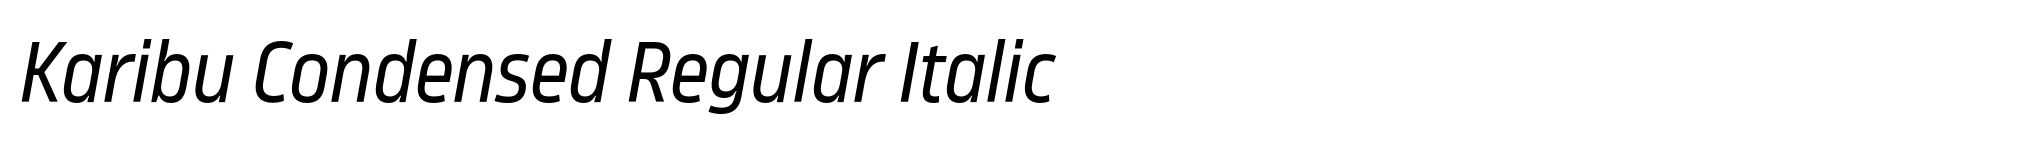 Karibu Condensed Regular Italic image